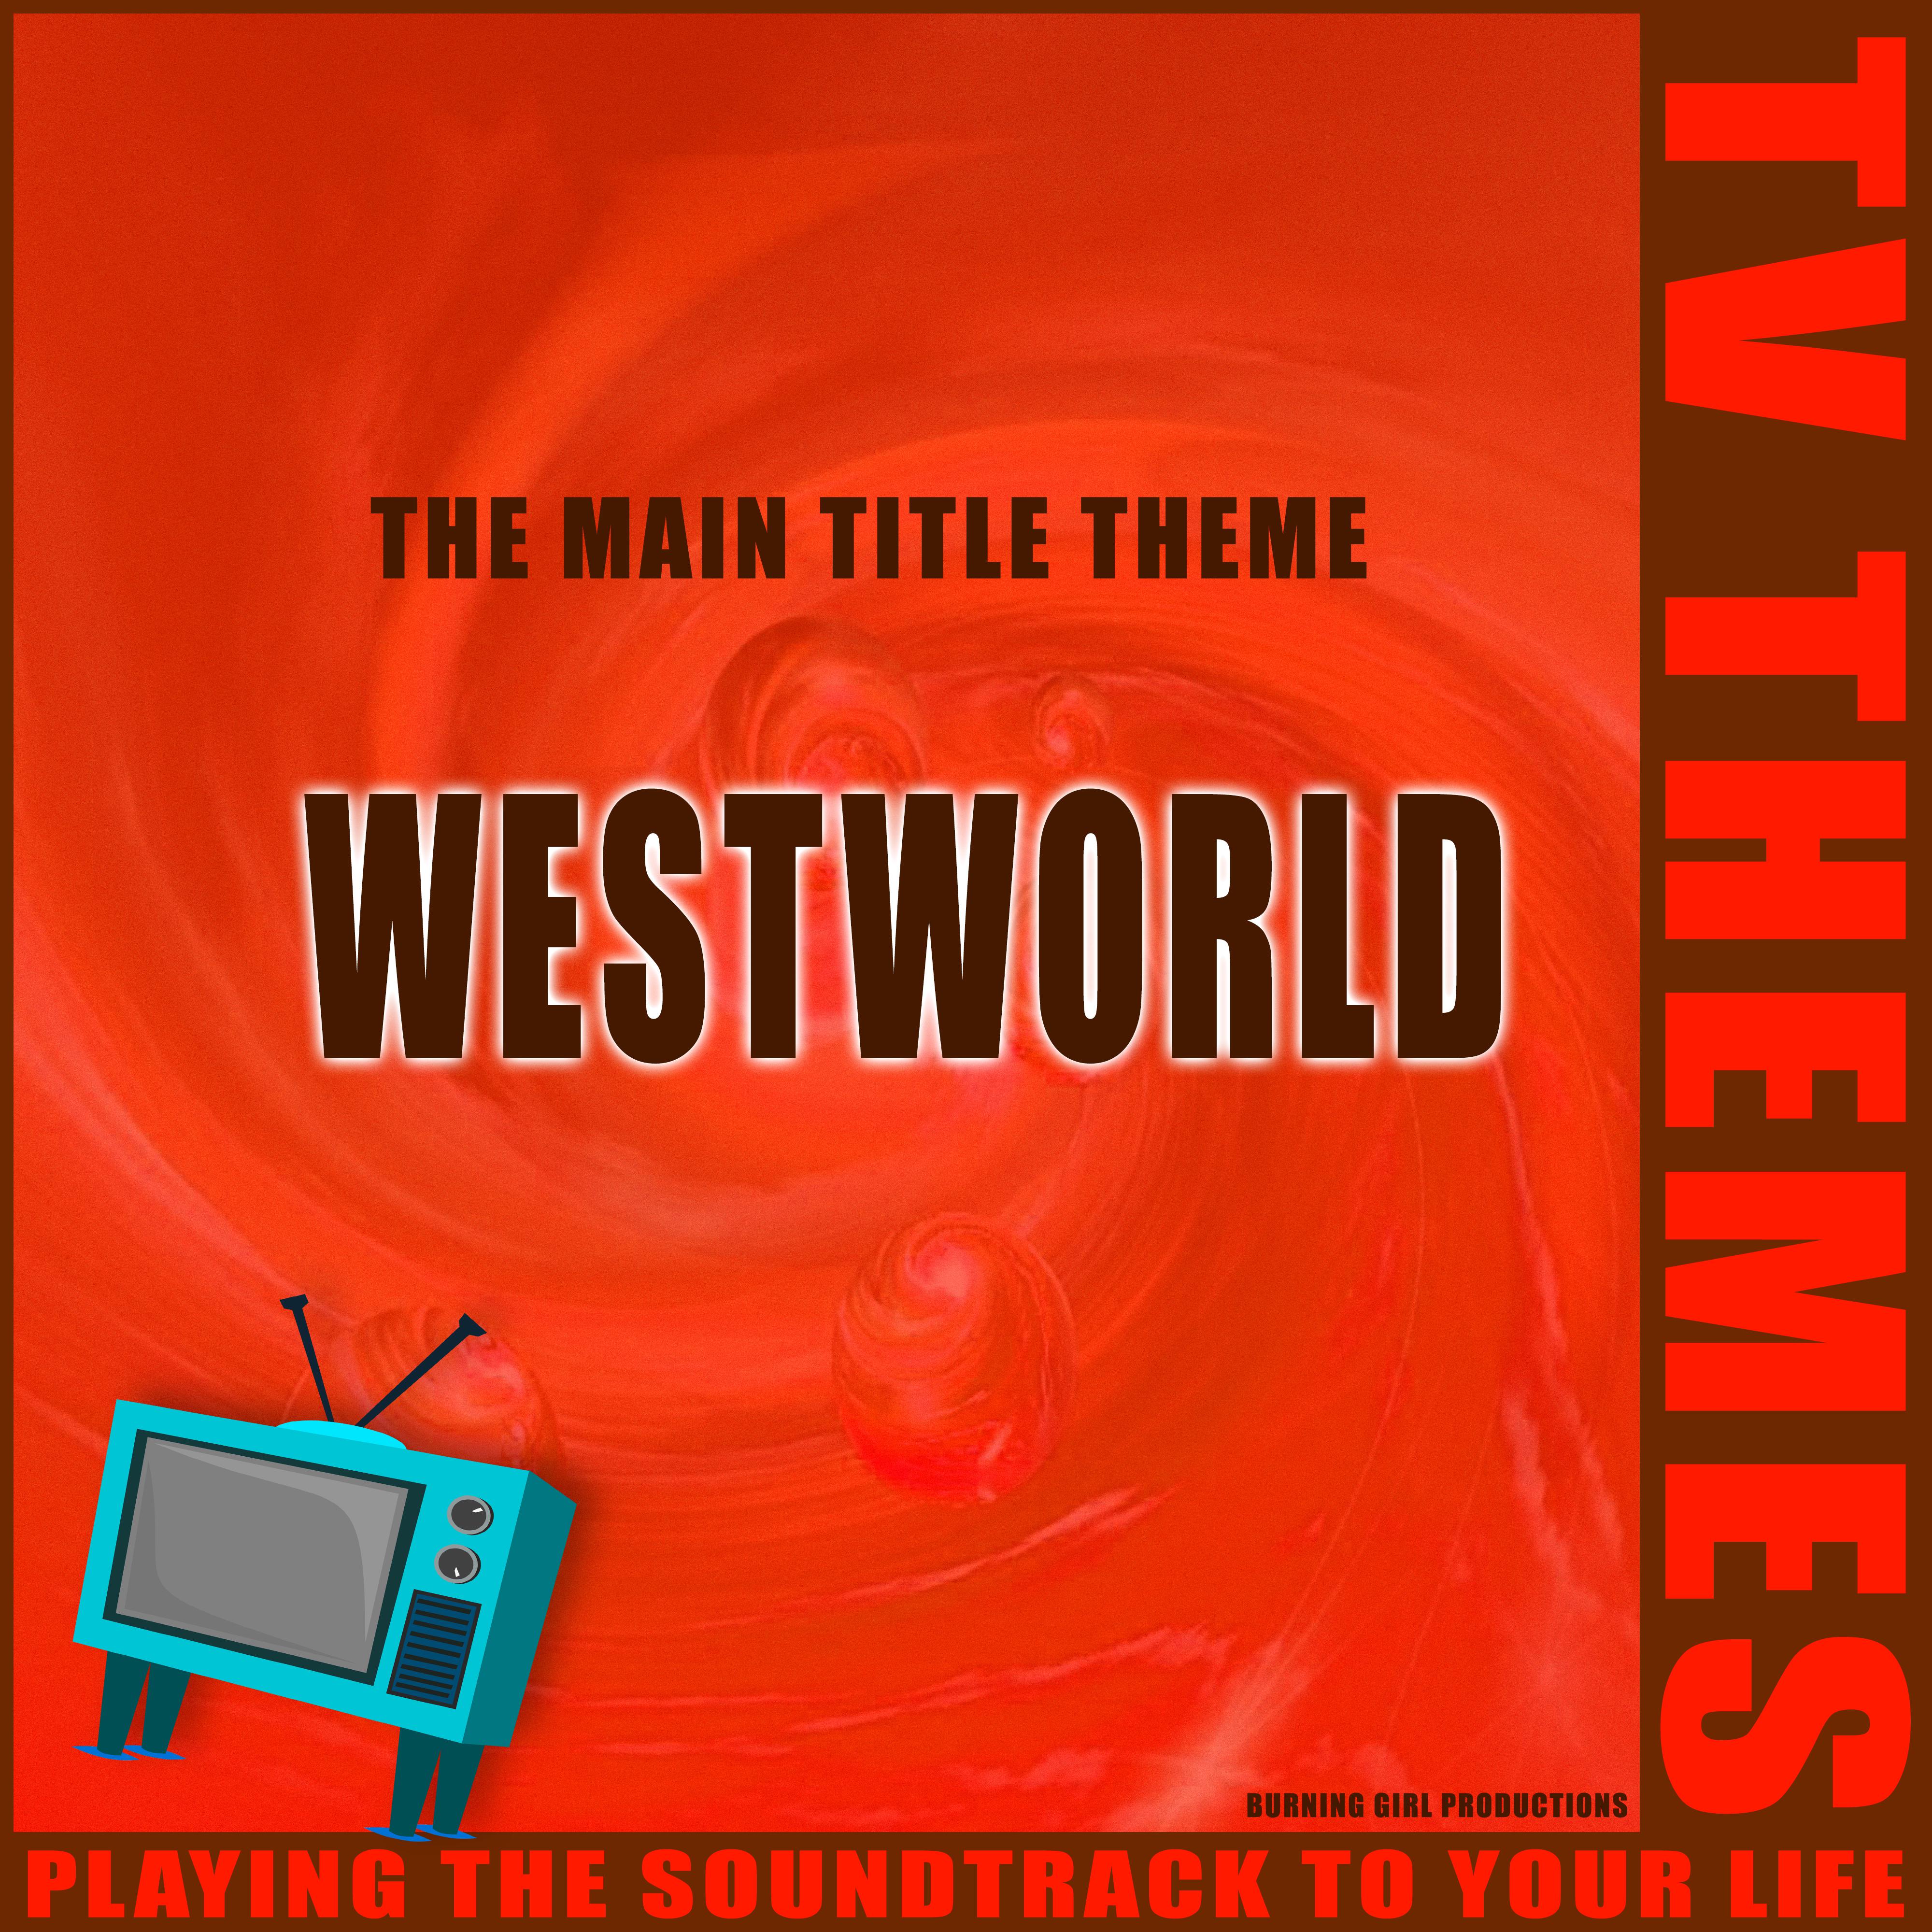 The Main Title Theme - Westworld